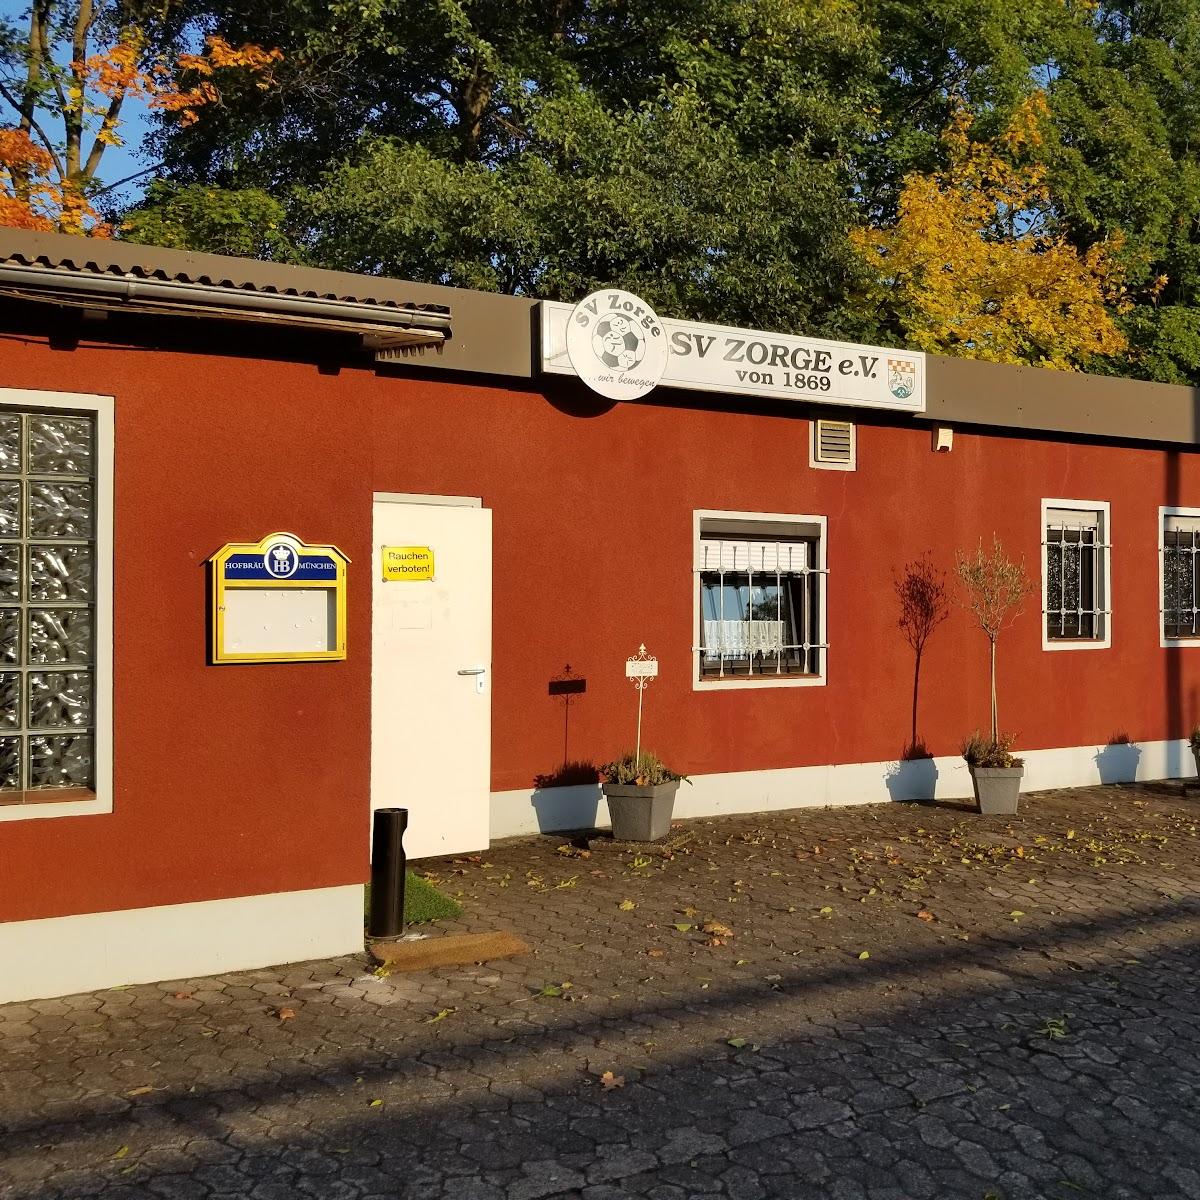 Restaurant "Sportplatz Zorge" in Walkenried